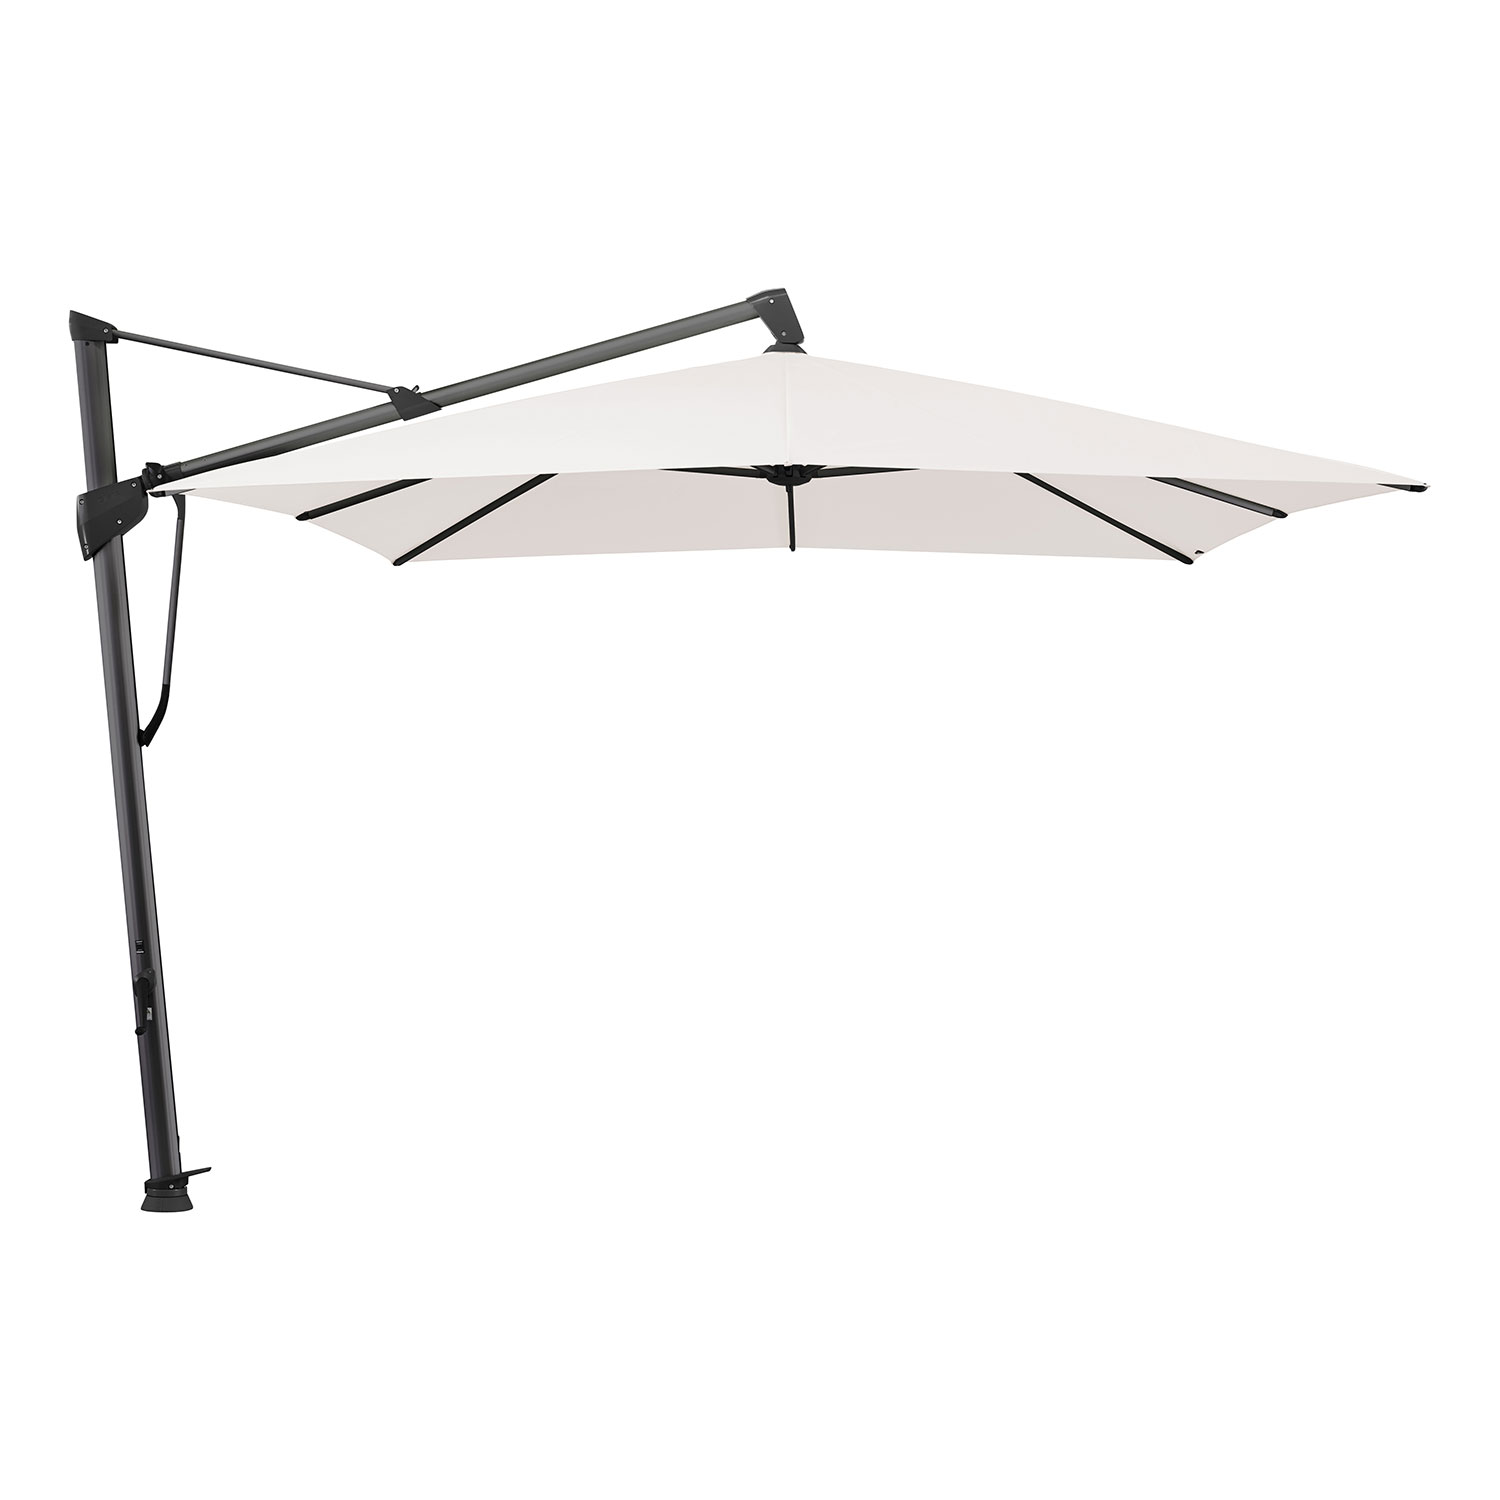 Glatz Sombrano S+ frihängande parasoll 400×300 cm kat.4 antracite alu / 404 white